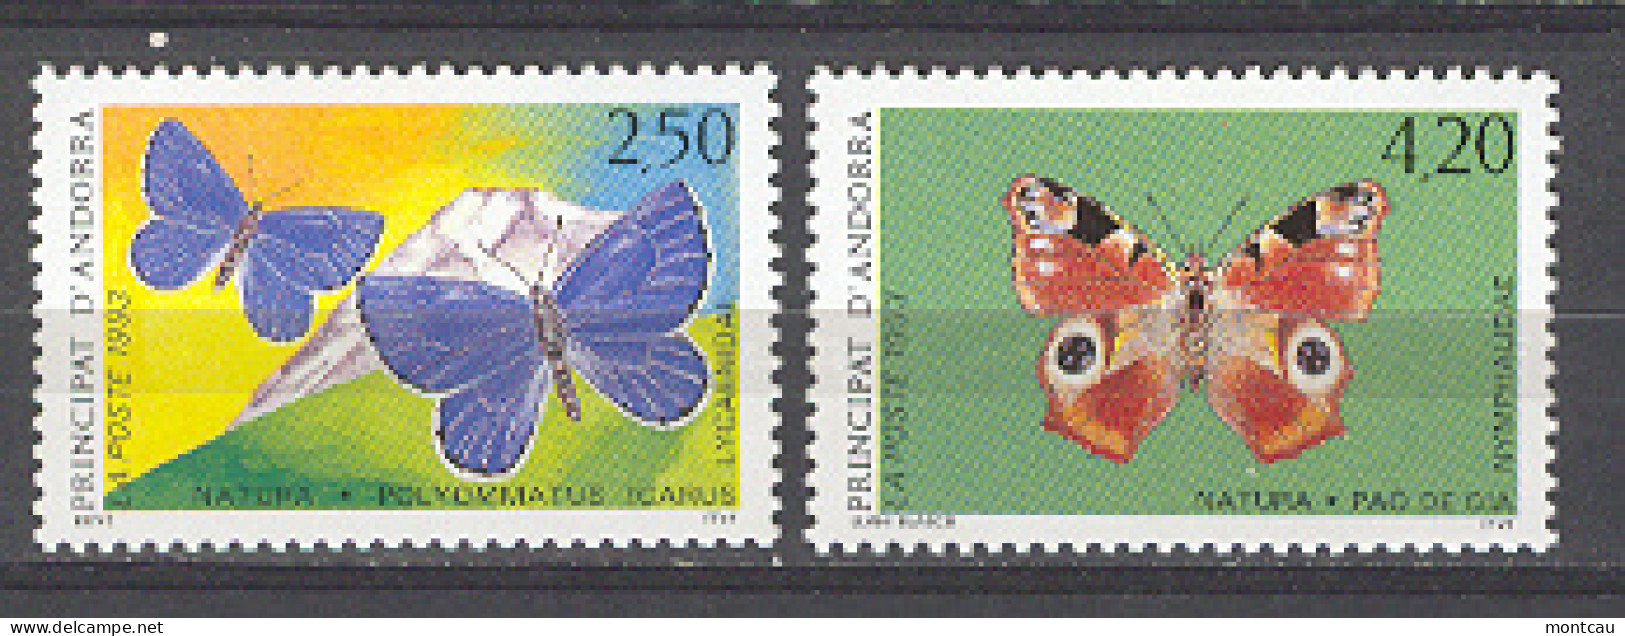 Andorra -Franc 1993 Mariposas. Y=432-33 E=453-54 (**) - Butterflies